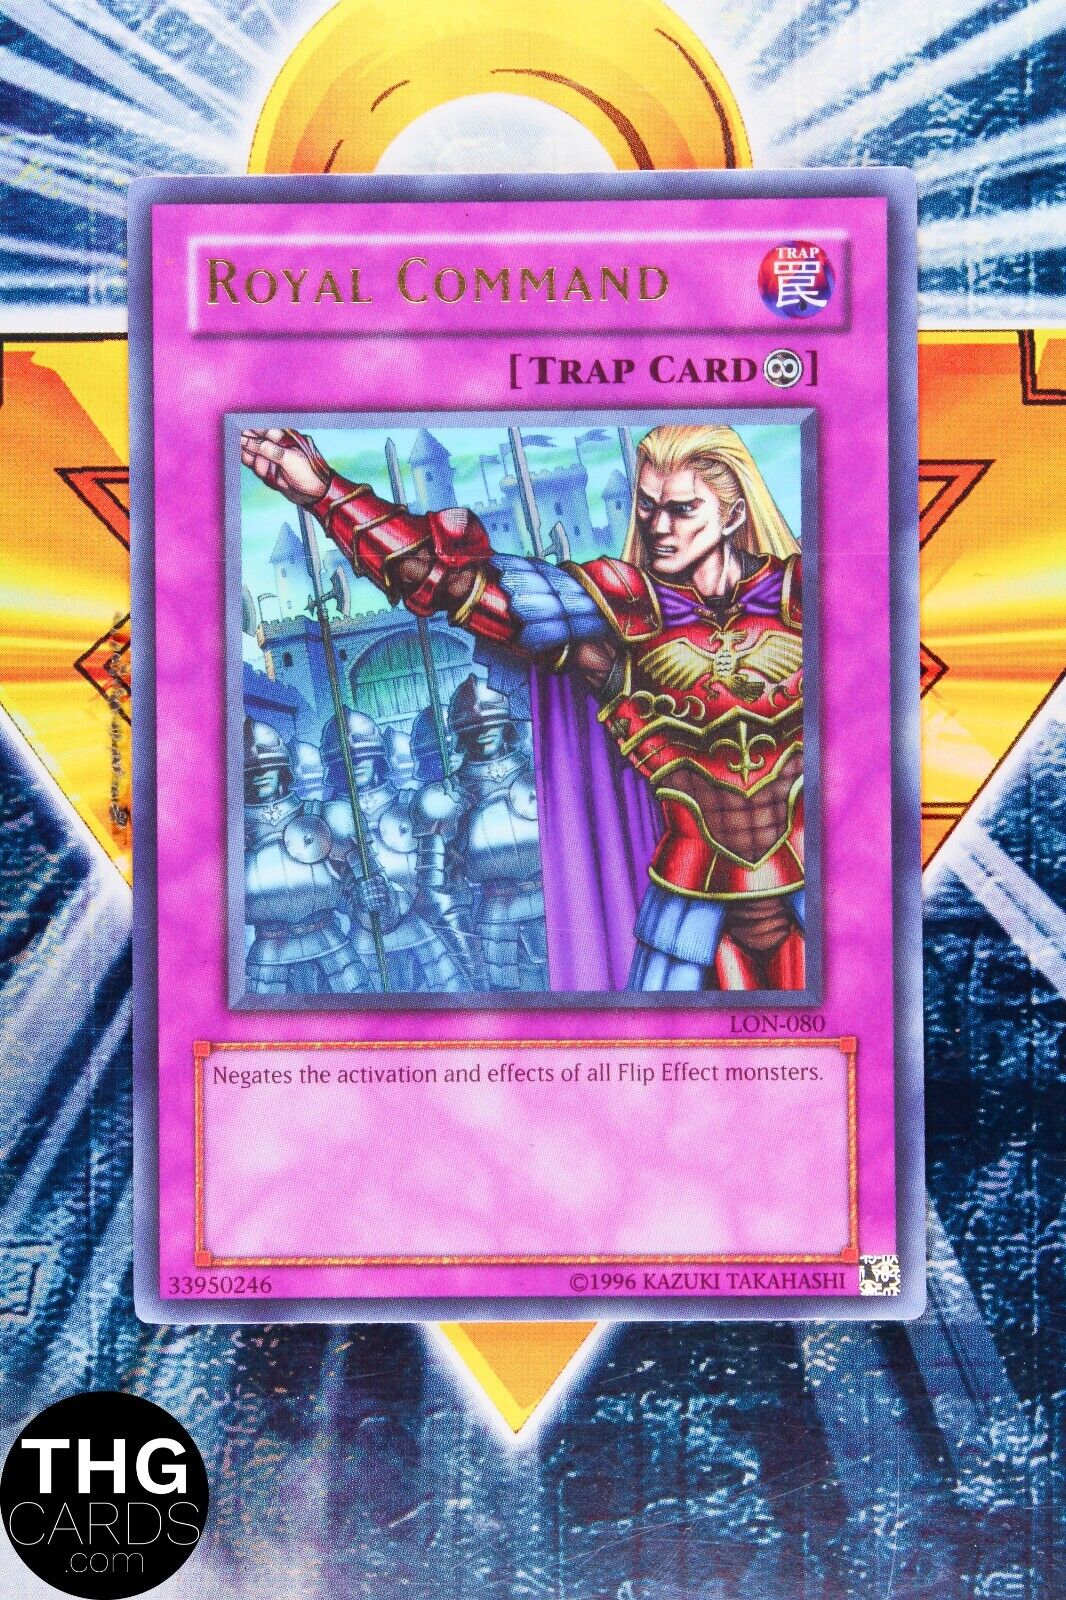 Royal Command LON-080 Ultra Rare Yugioh Card